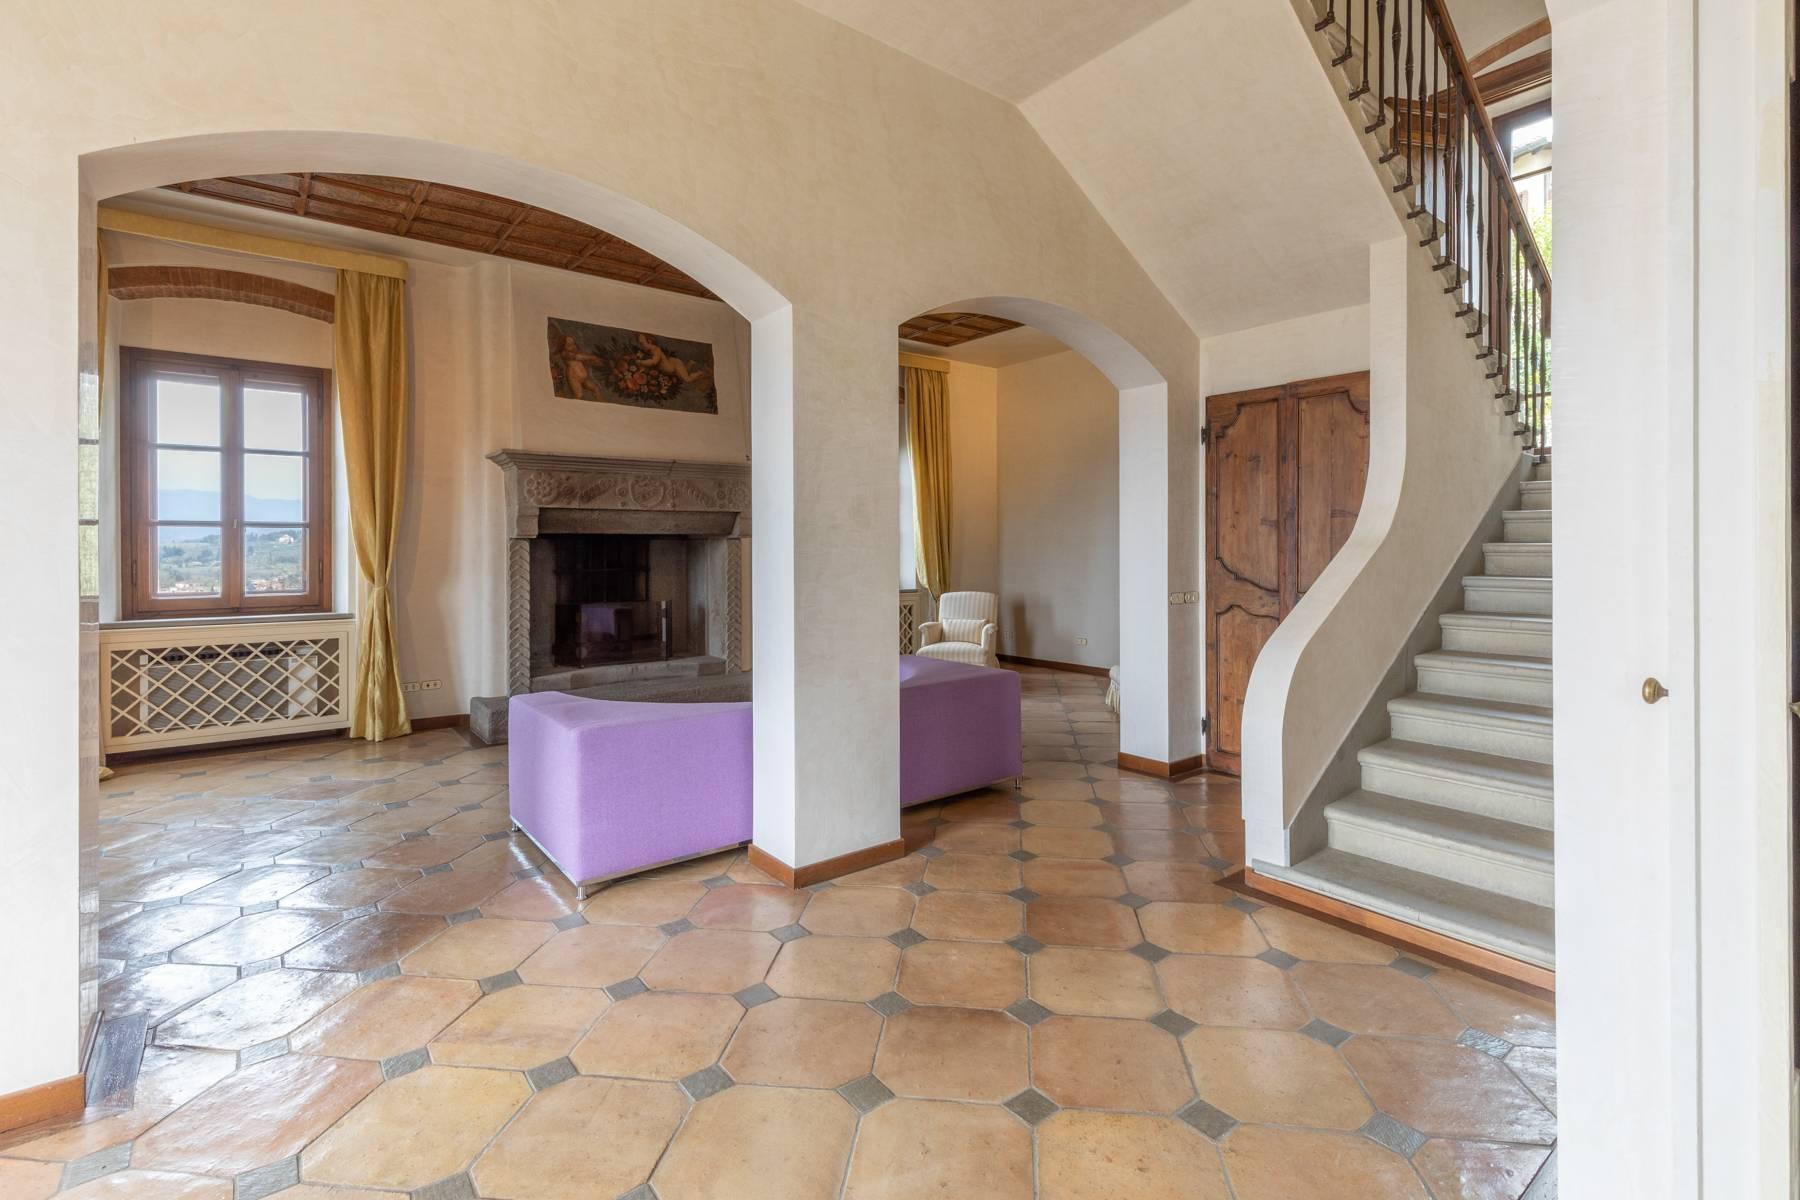 Historical villa dating back to the XVII century overlooking Arezzo - 34